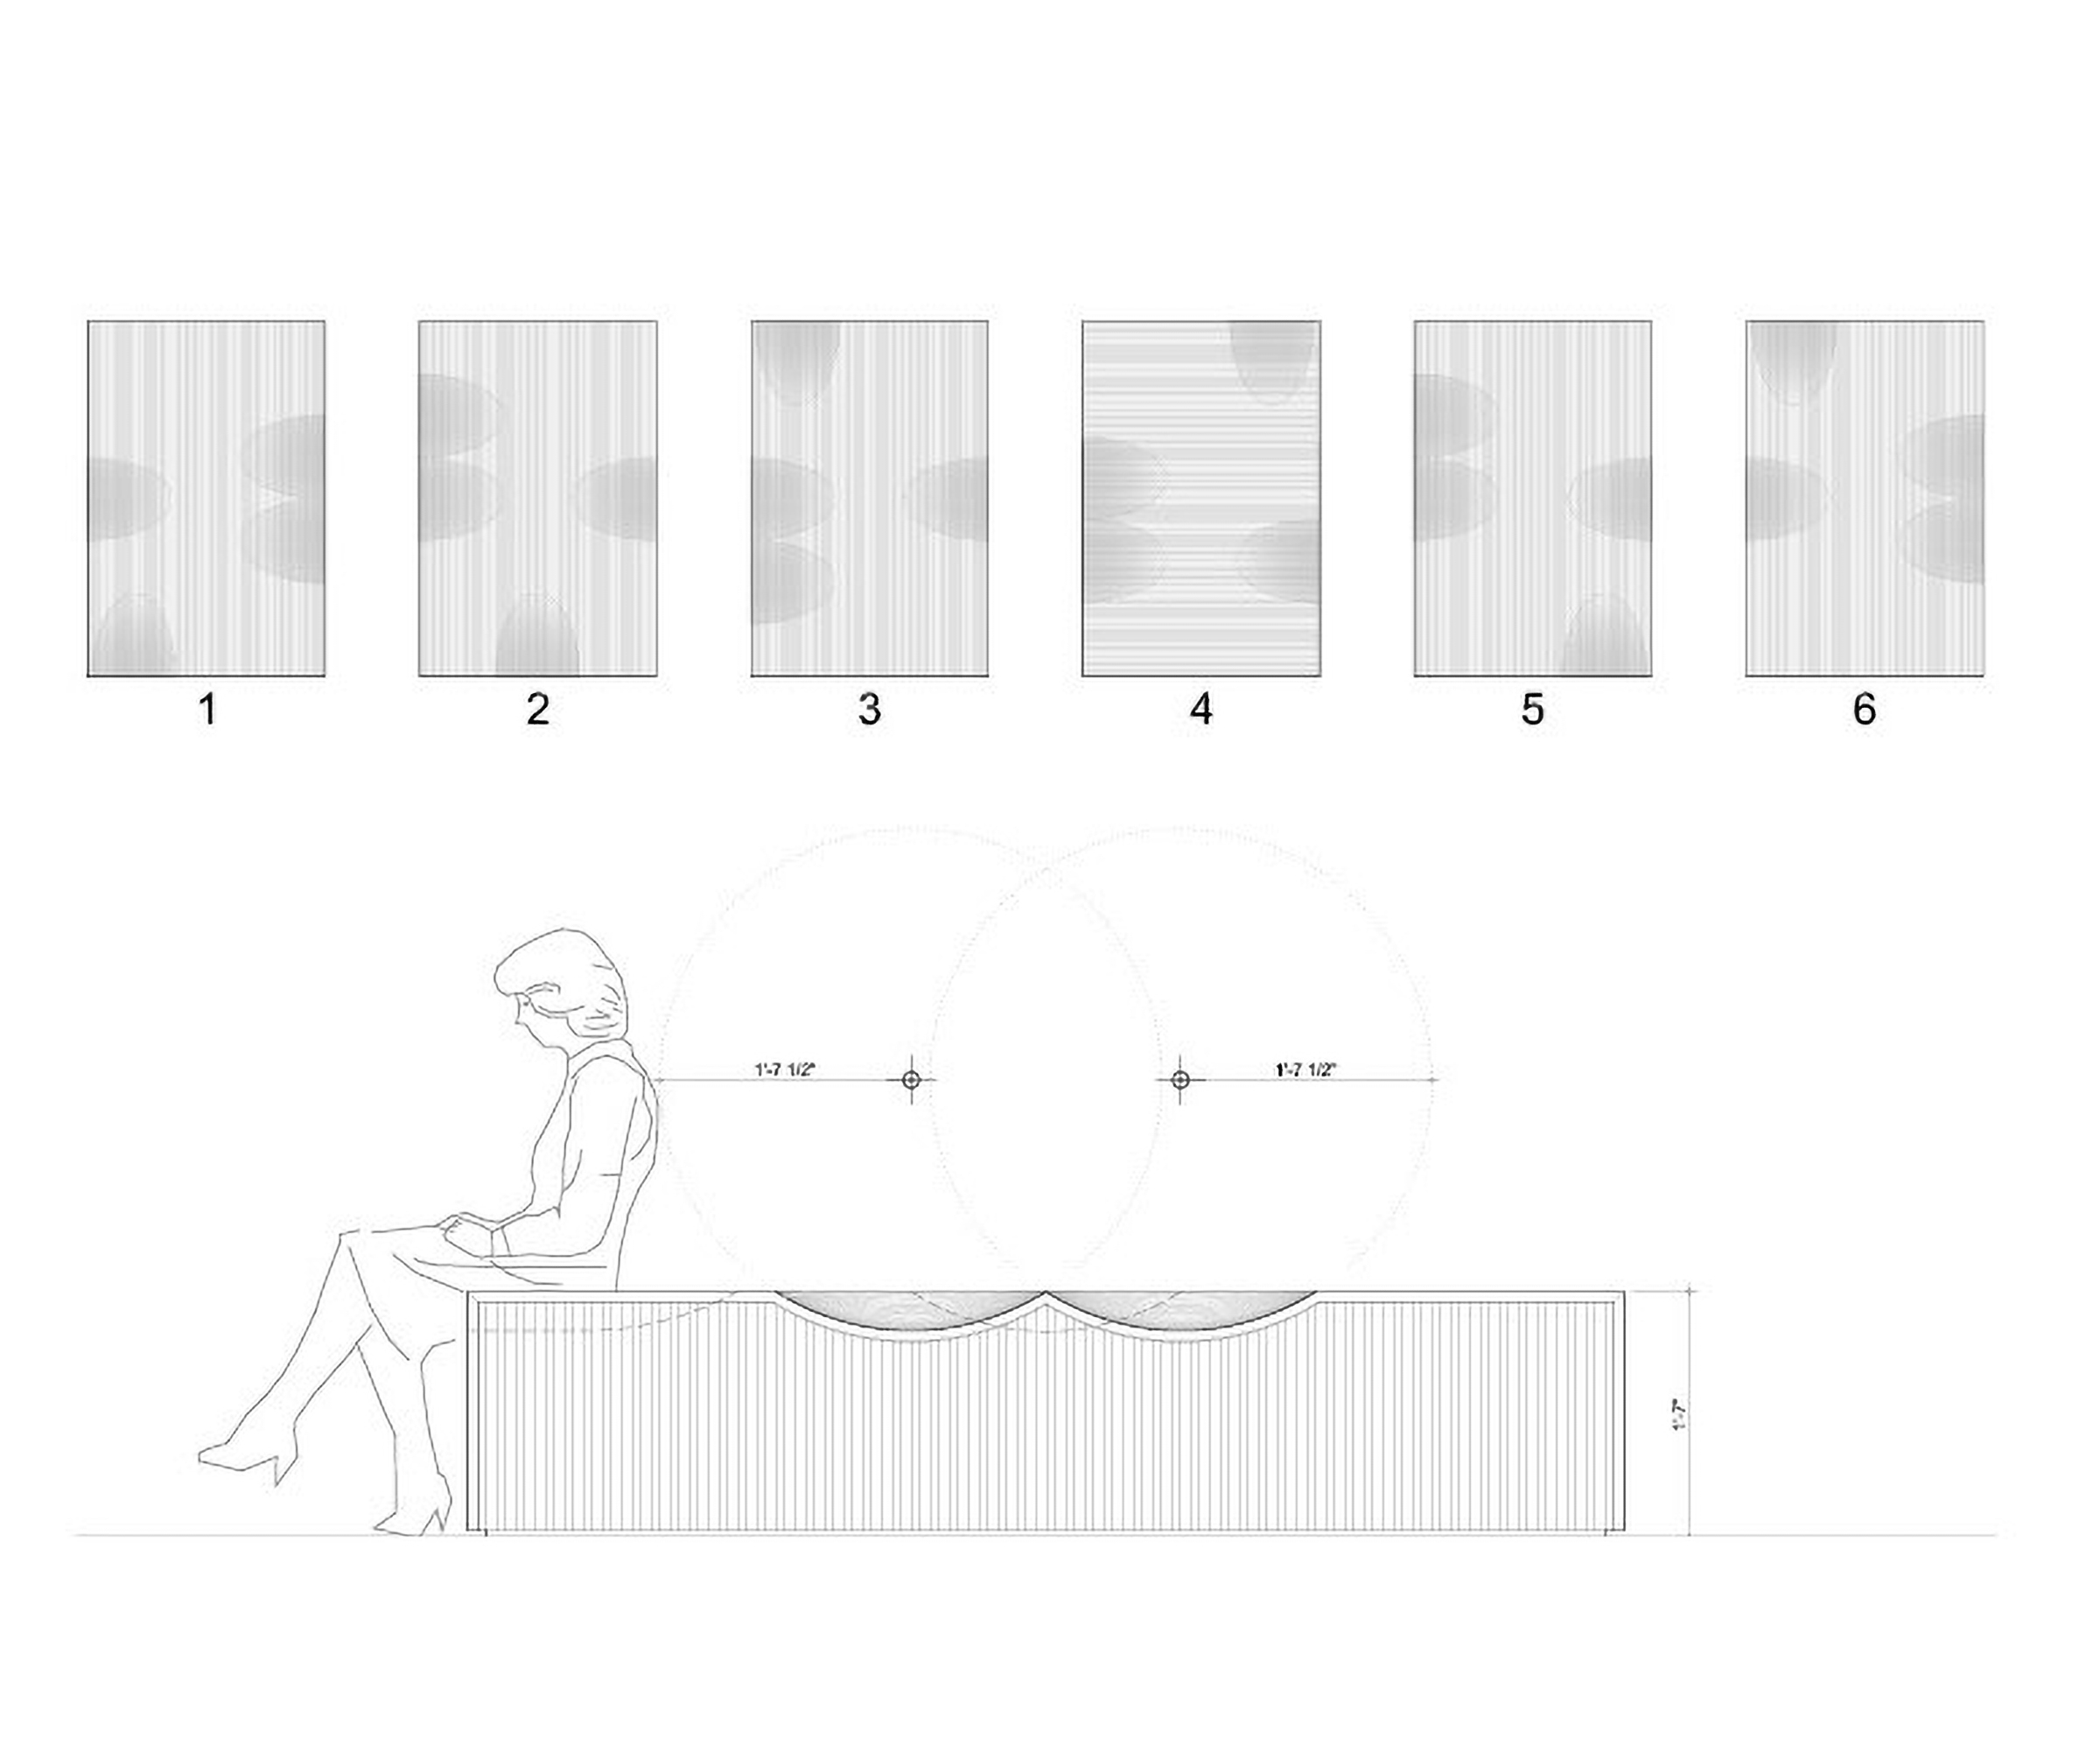 A drawing illustrating six distinct bench designs.